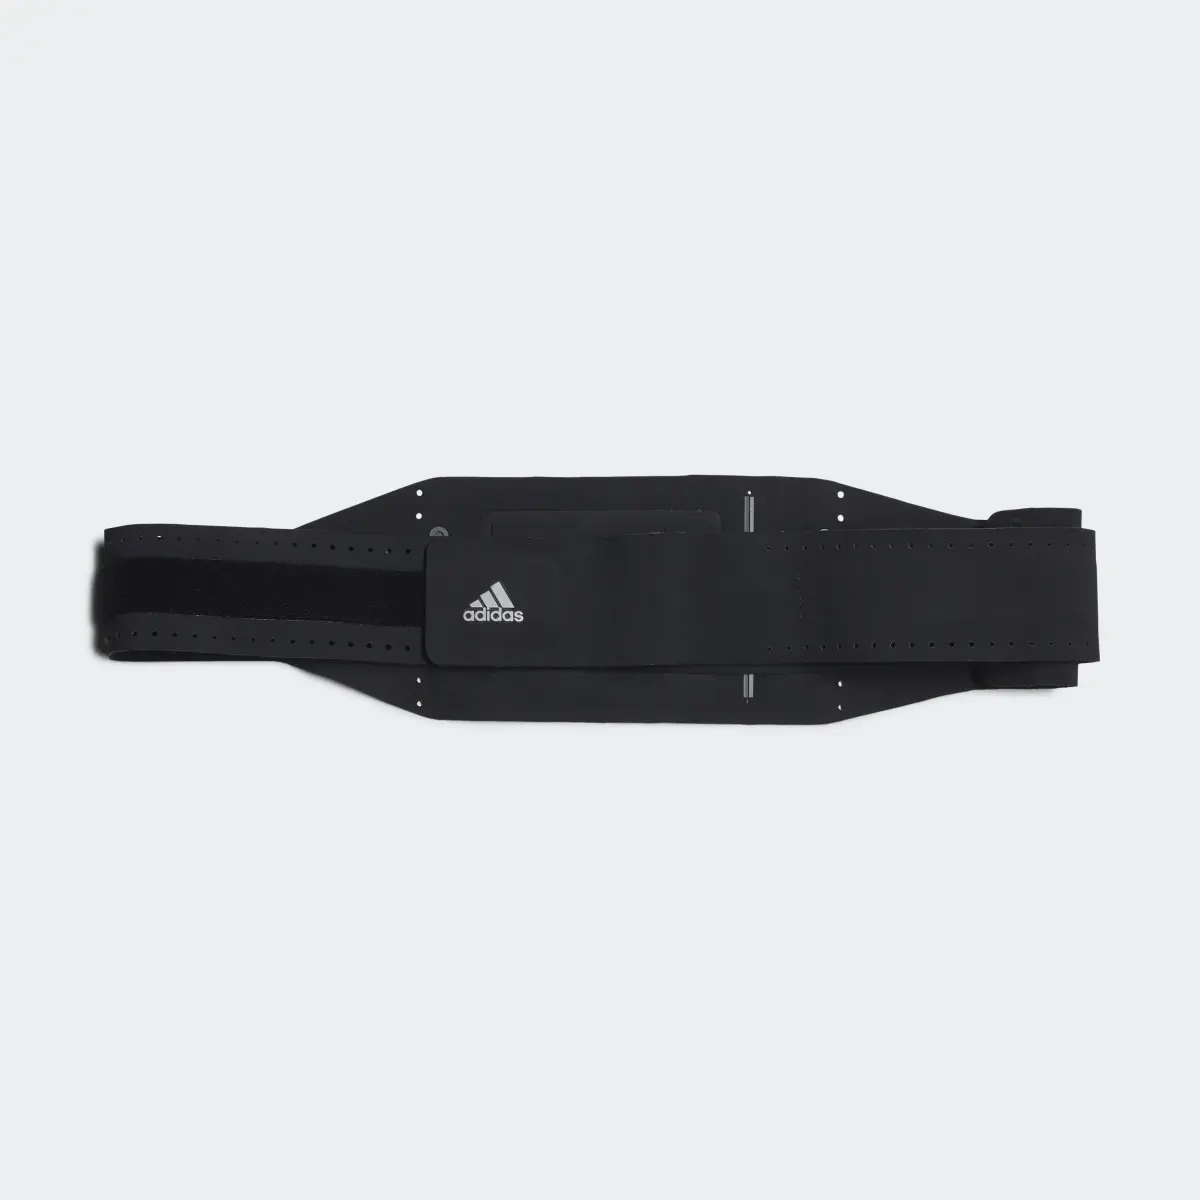 Adidas Universal Sportbelt Black. 3